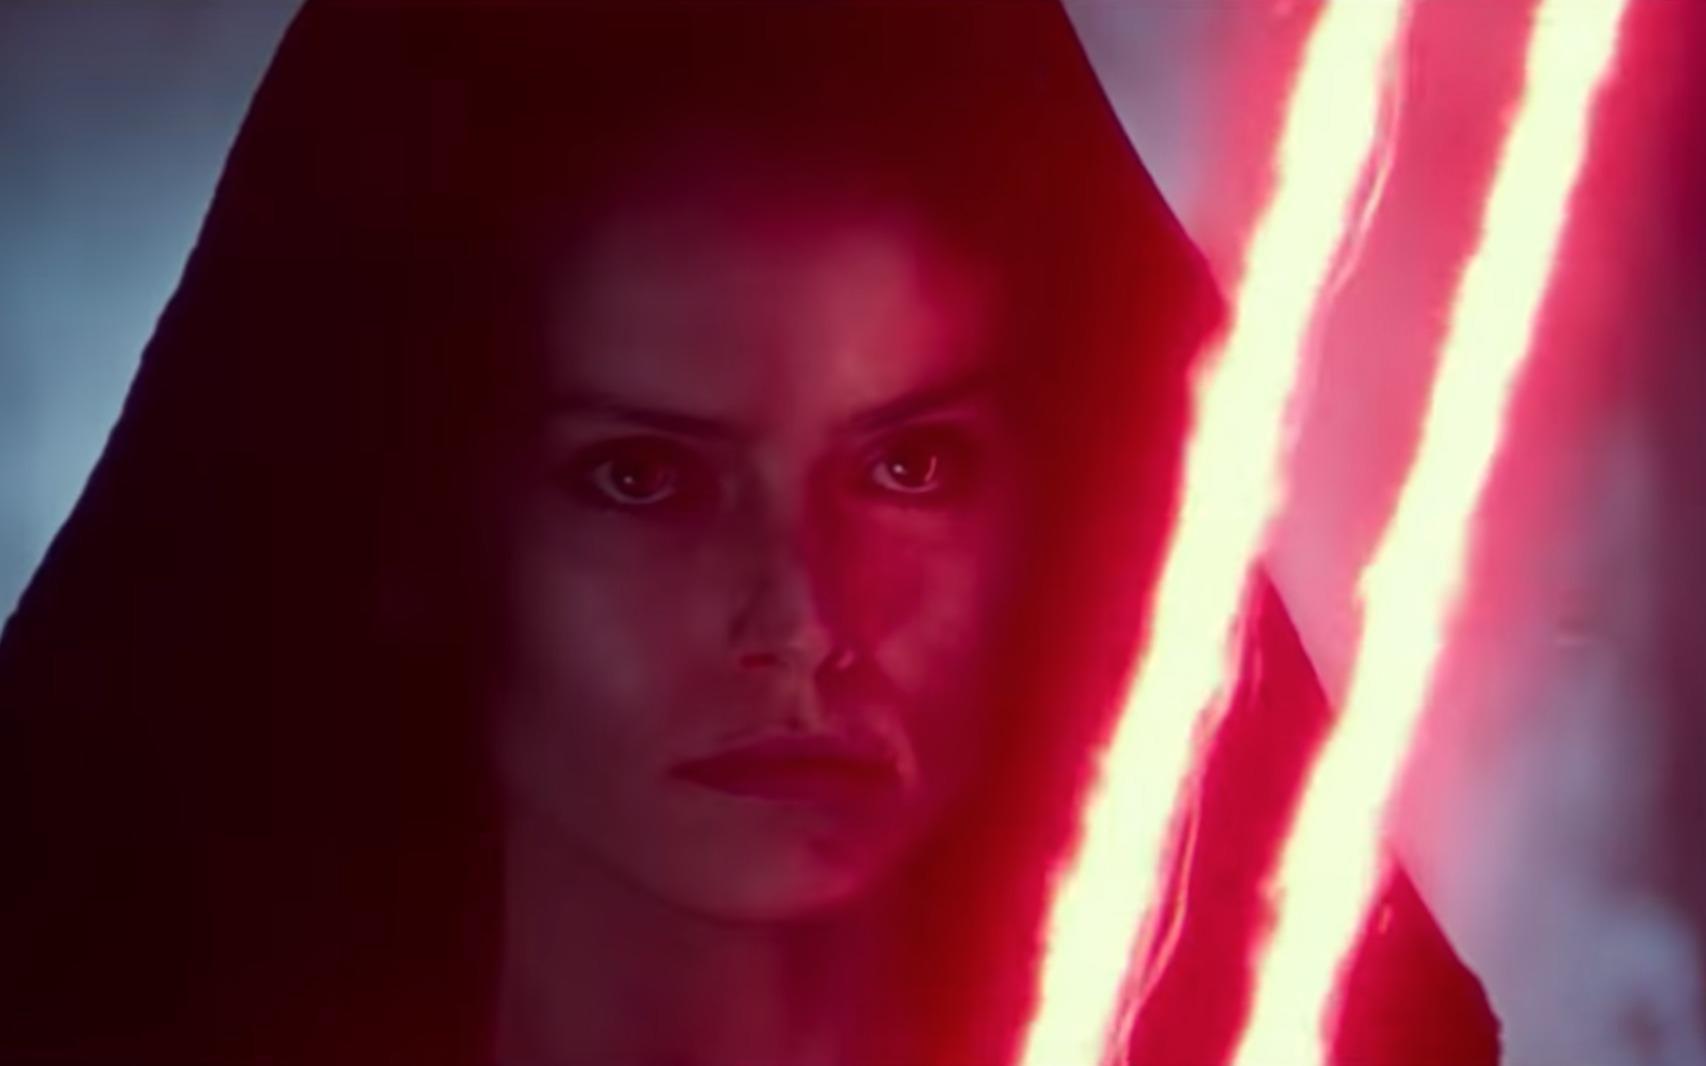 New Star Wars: The Rise of Skywalker footage shows darker